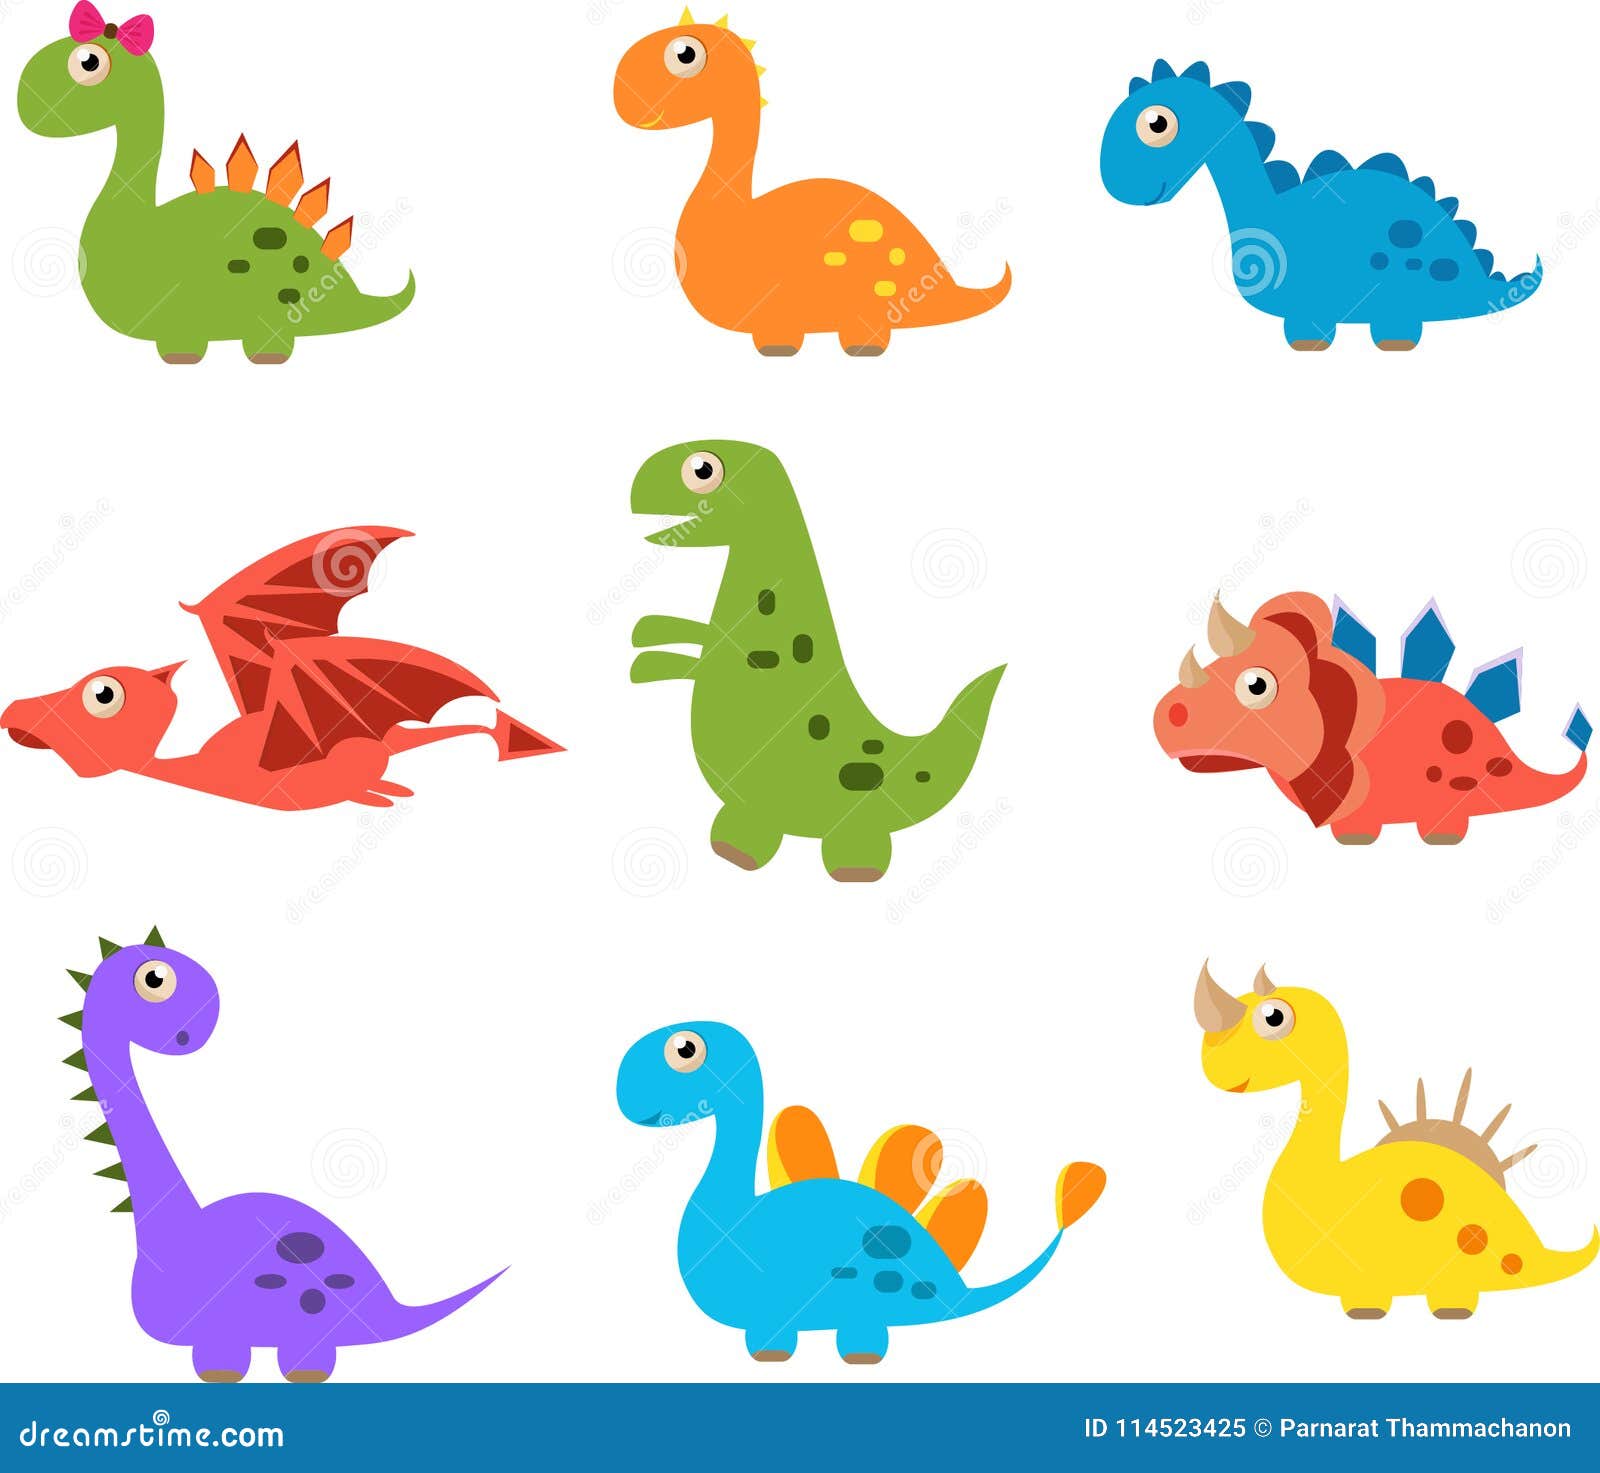 Cute Dinosaurs Isolated on White Background Stock Illustration ...